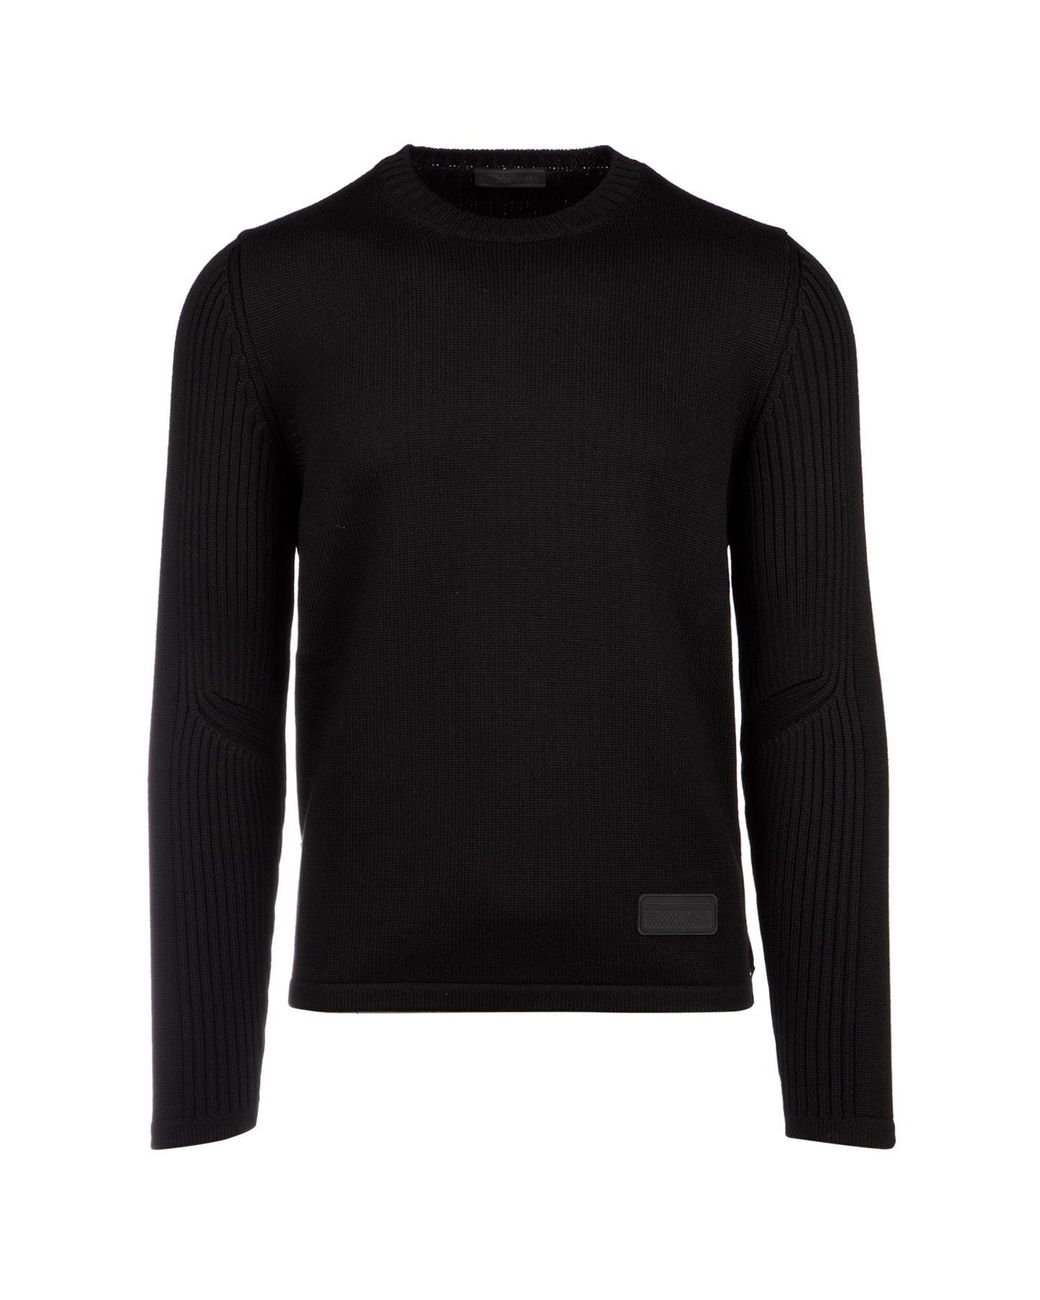 Prada Wool Logo Patch Sweater in Black for Men - Lyst